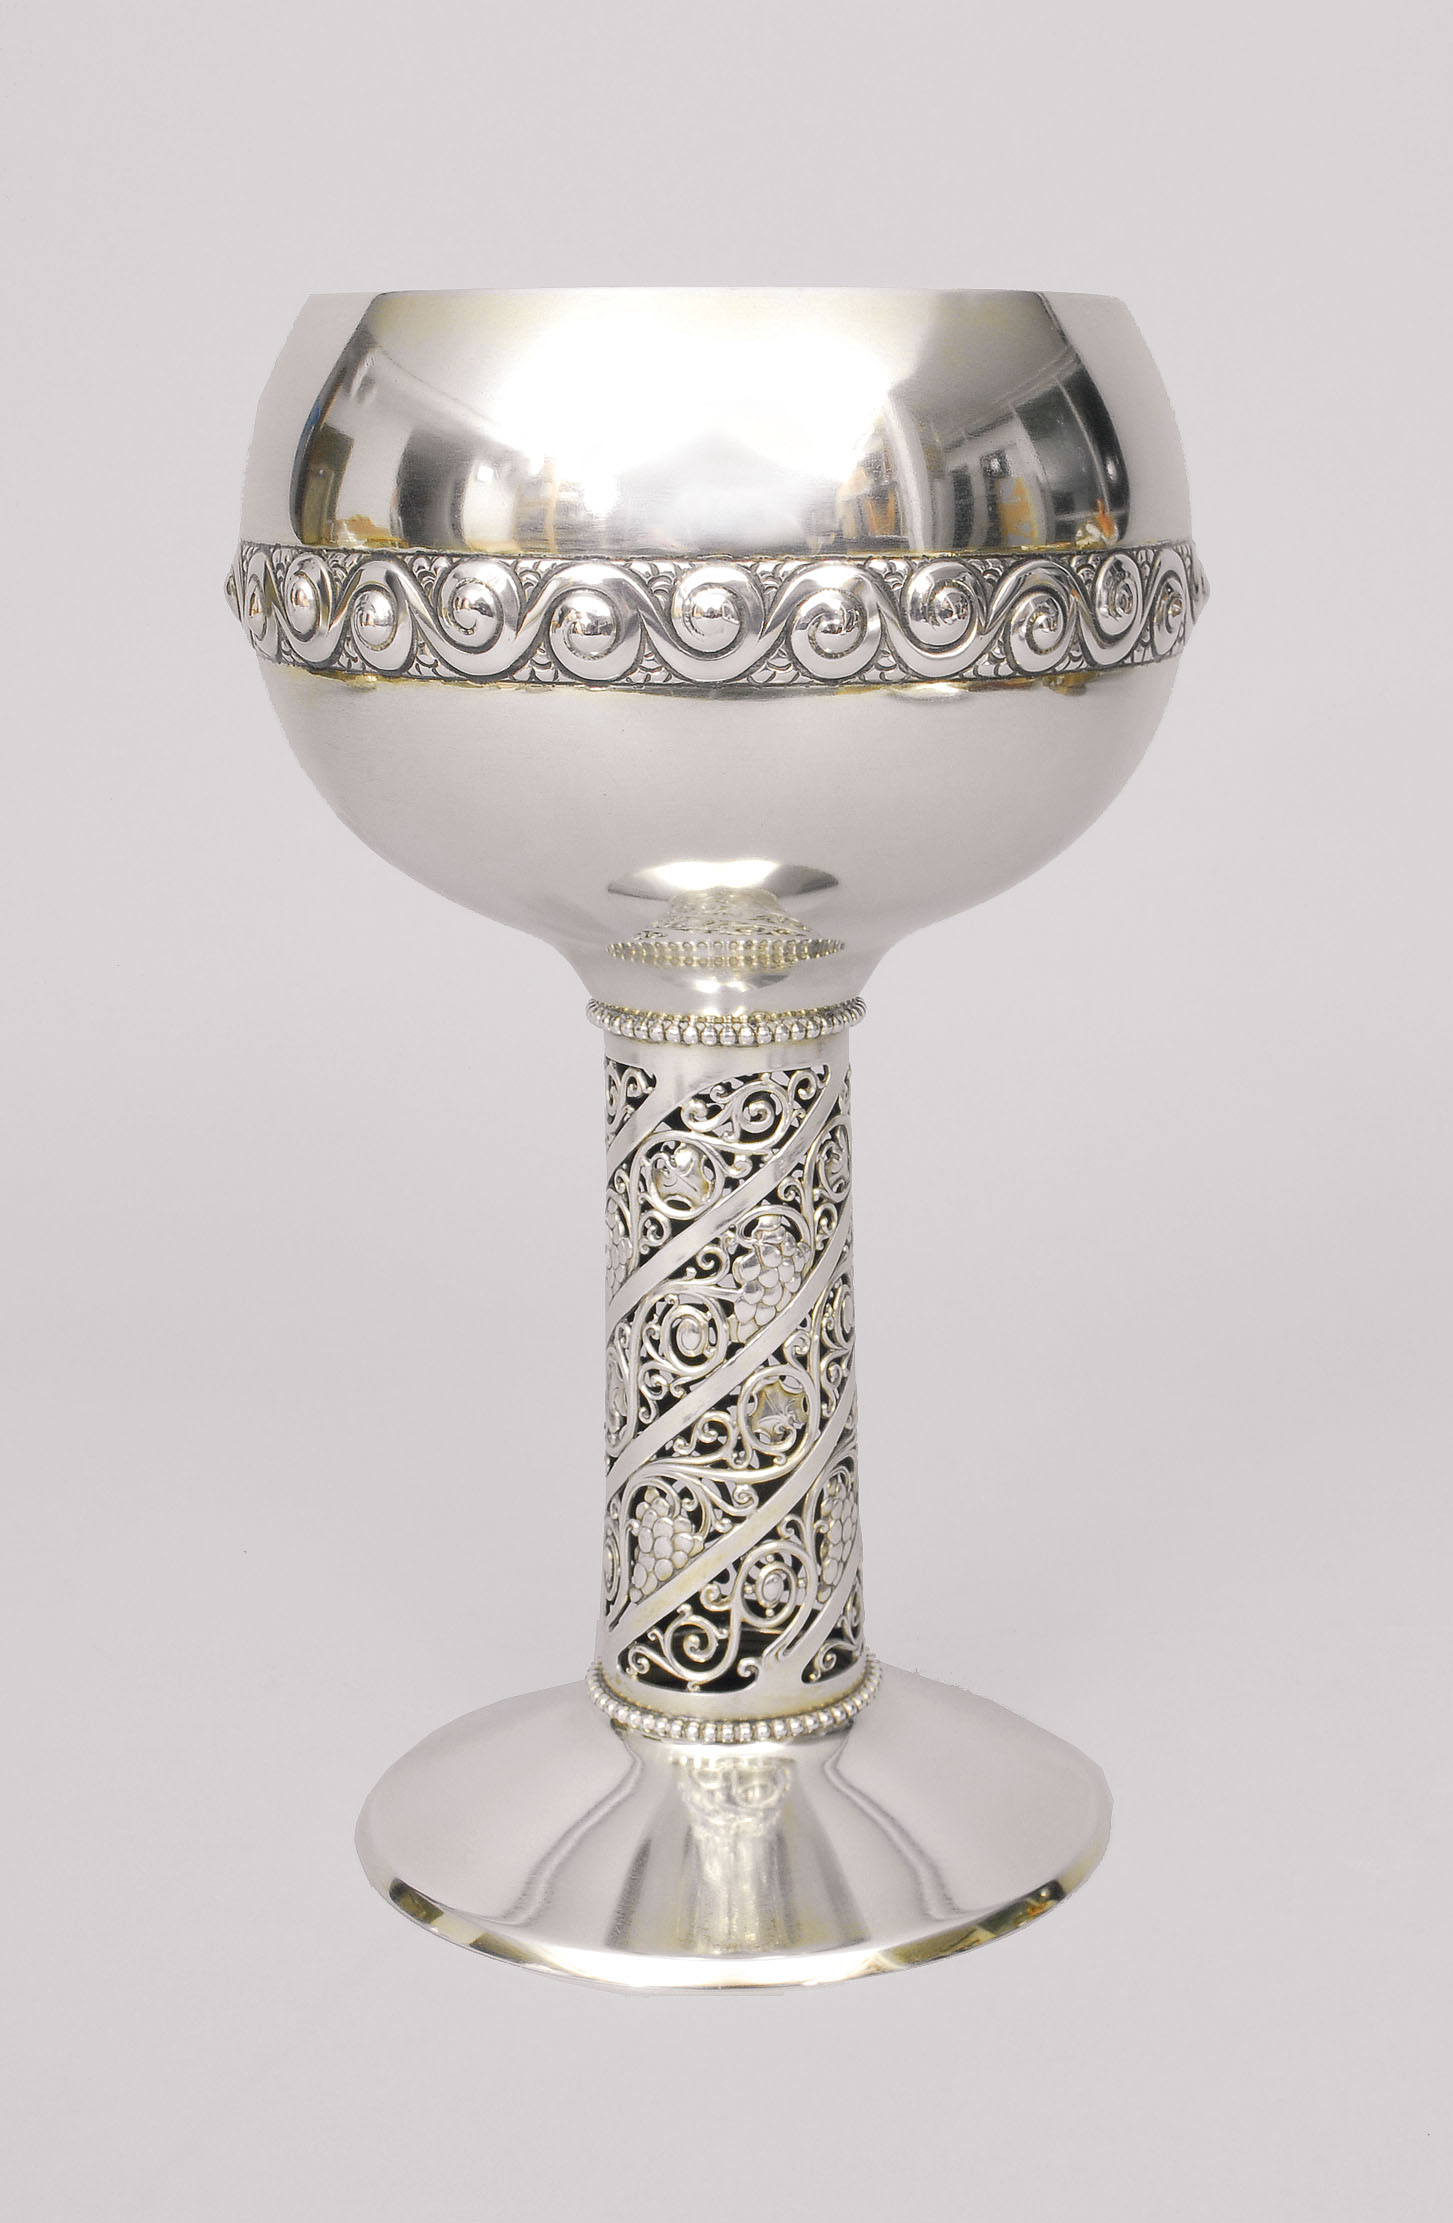 An Art-Nouveau goblet with ornaments of grapes